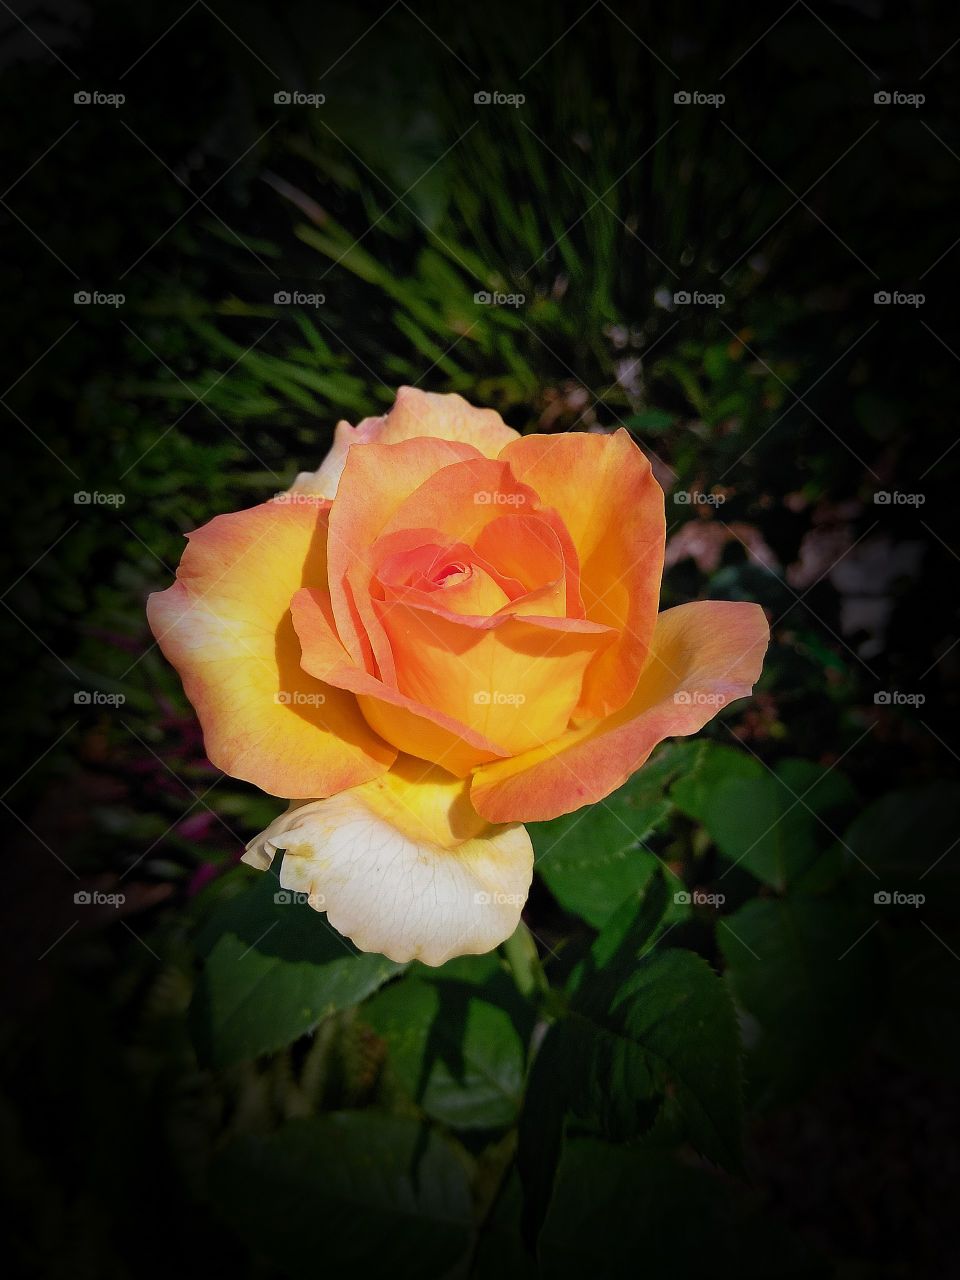 Peace Rose in bloom